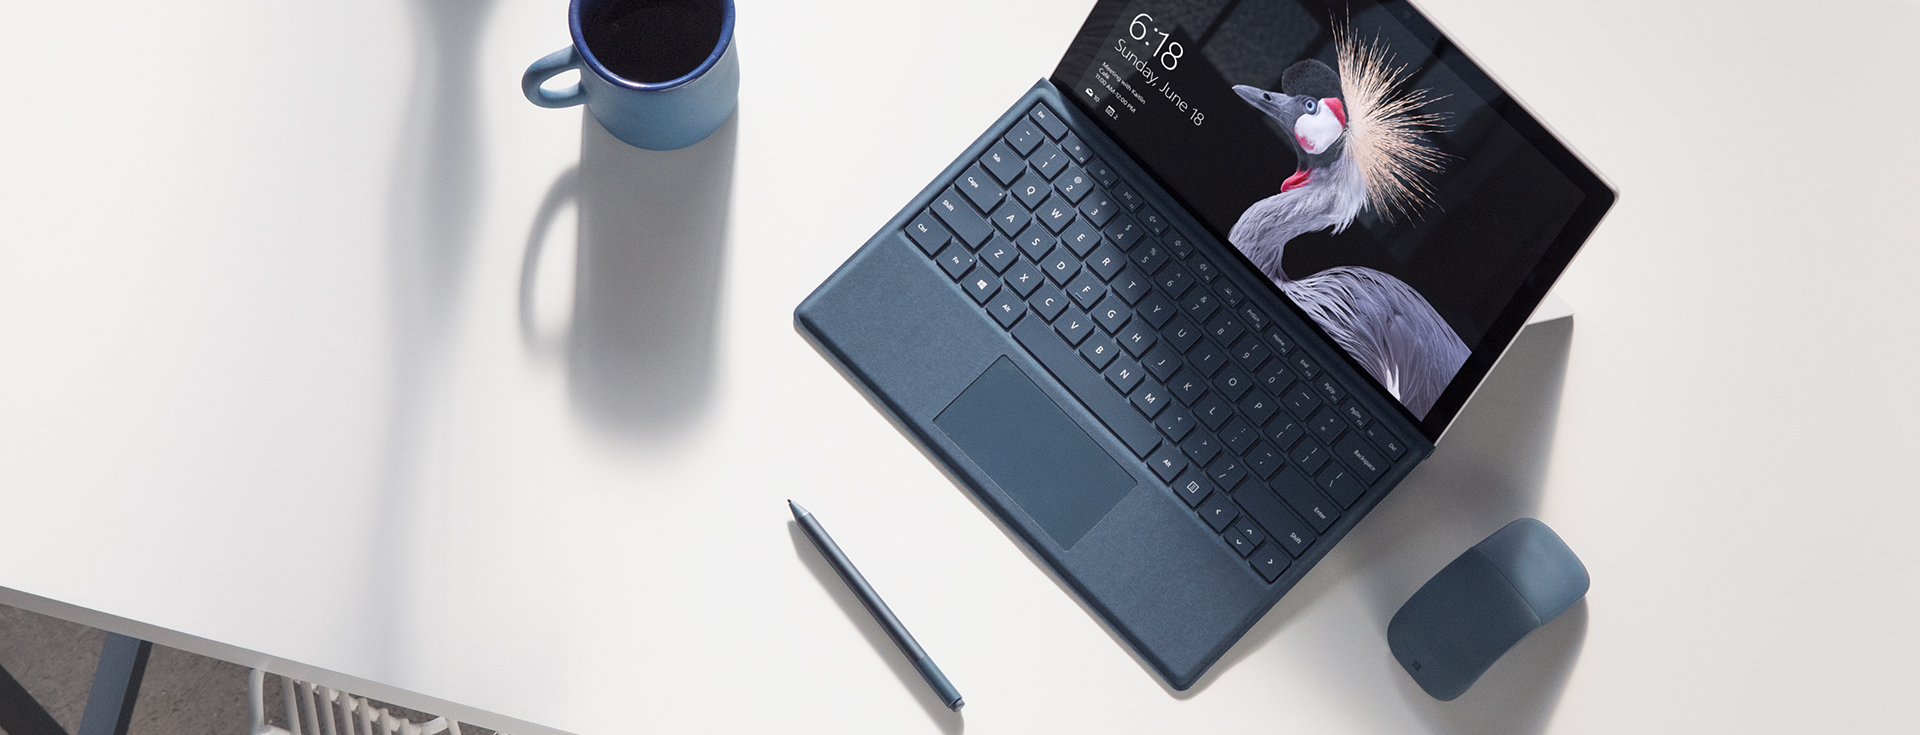 Microsoft Surface Pen, Charcoal, EYU-00001 - Walmart.com